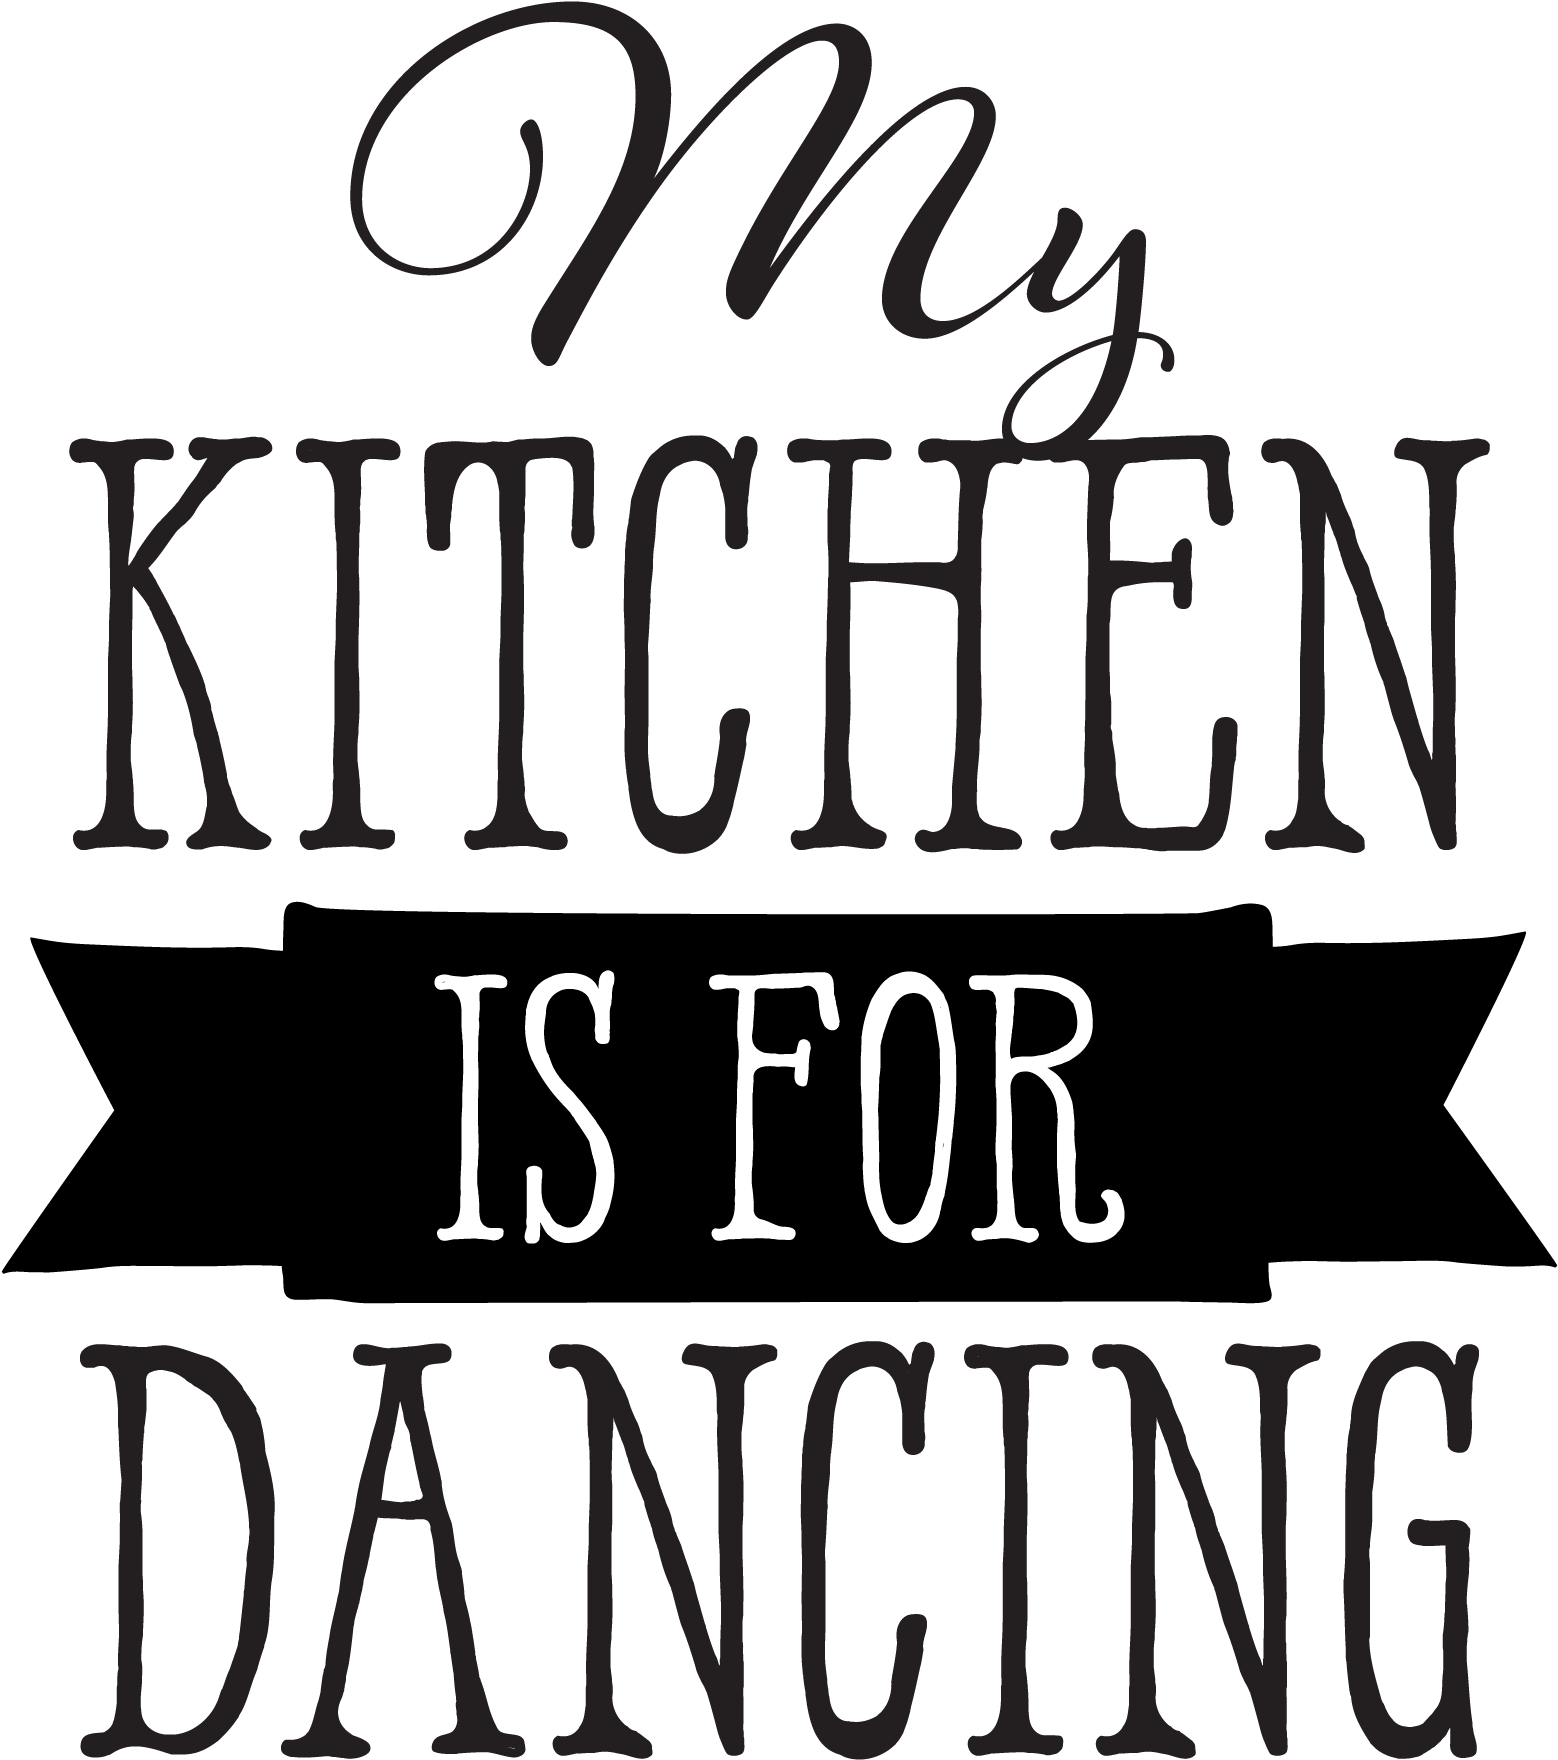 My Kitchen Is For Dancing - My Kitchen Is For Dancing Sign (1875x1875)